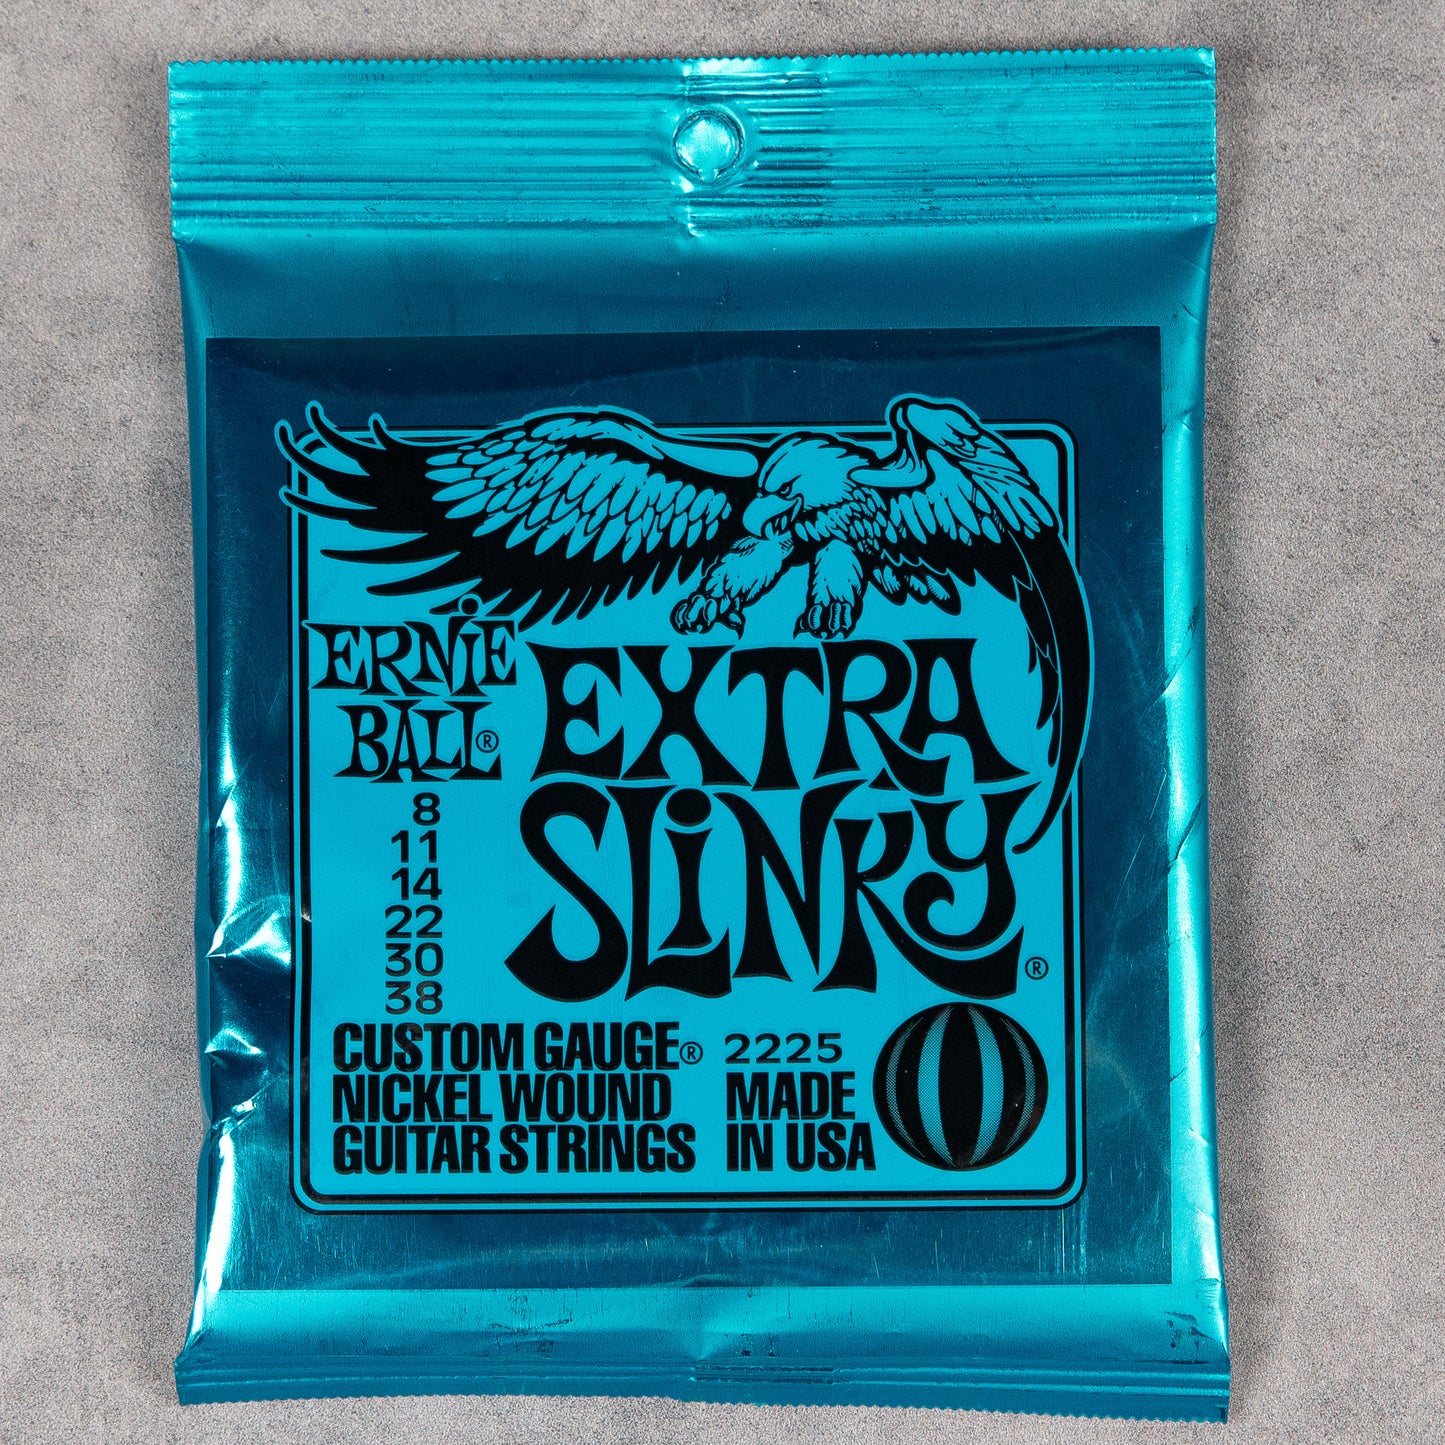 Ernie Ball Extra Slinky Nickel Wound Electric Guitar Strings, 8-38